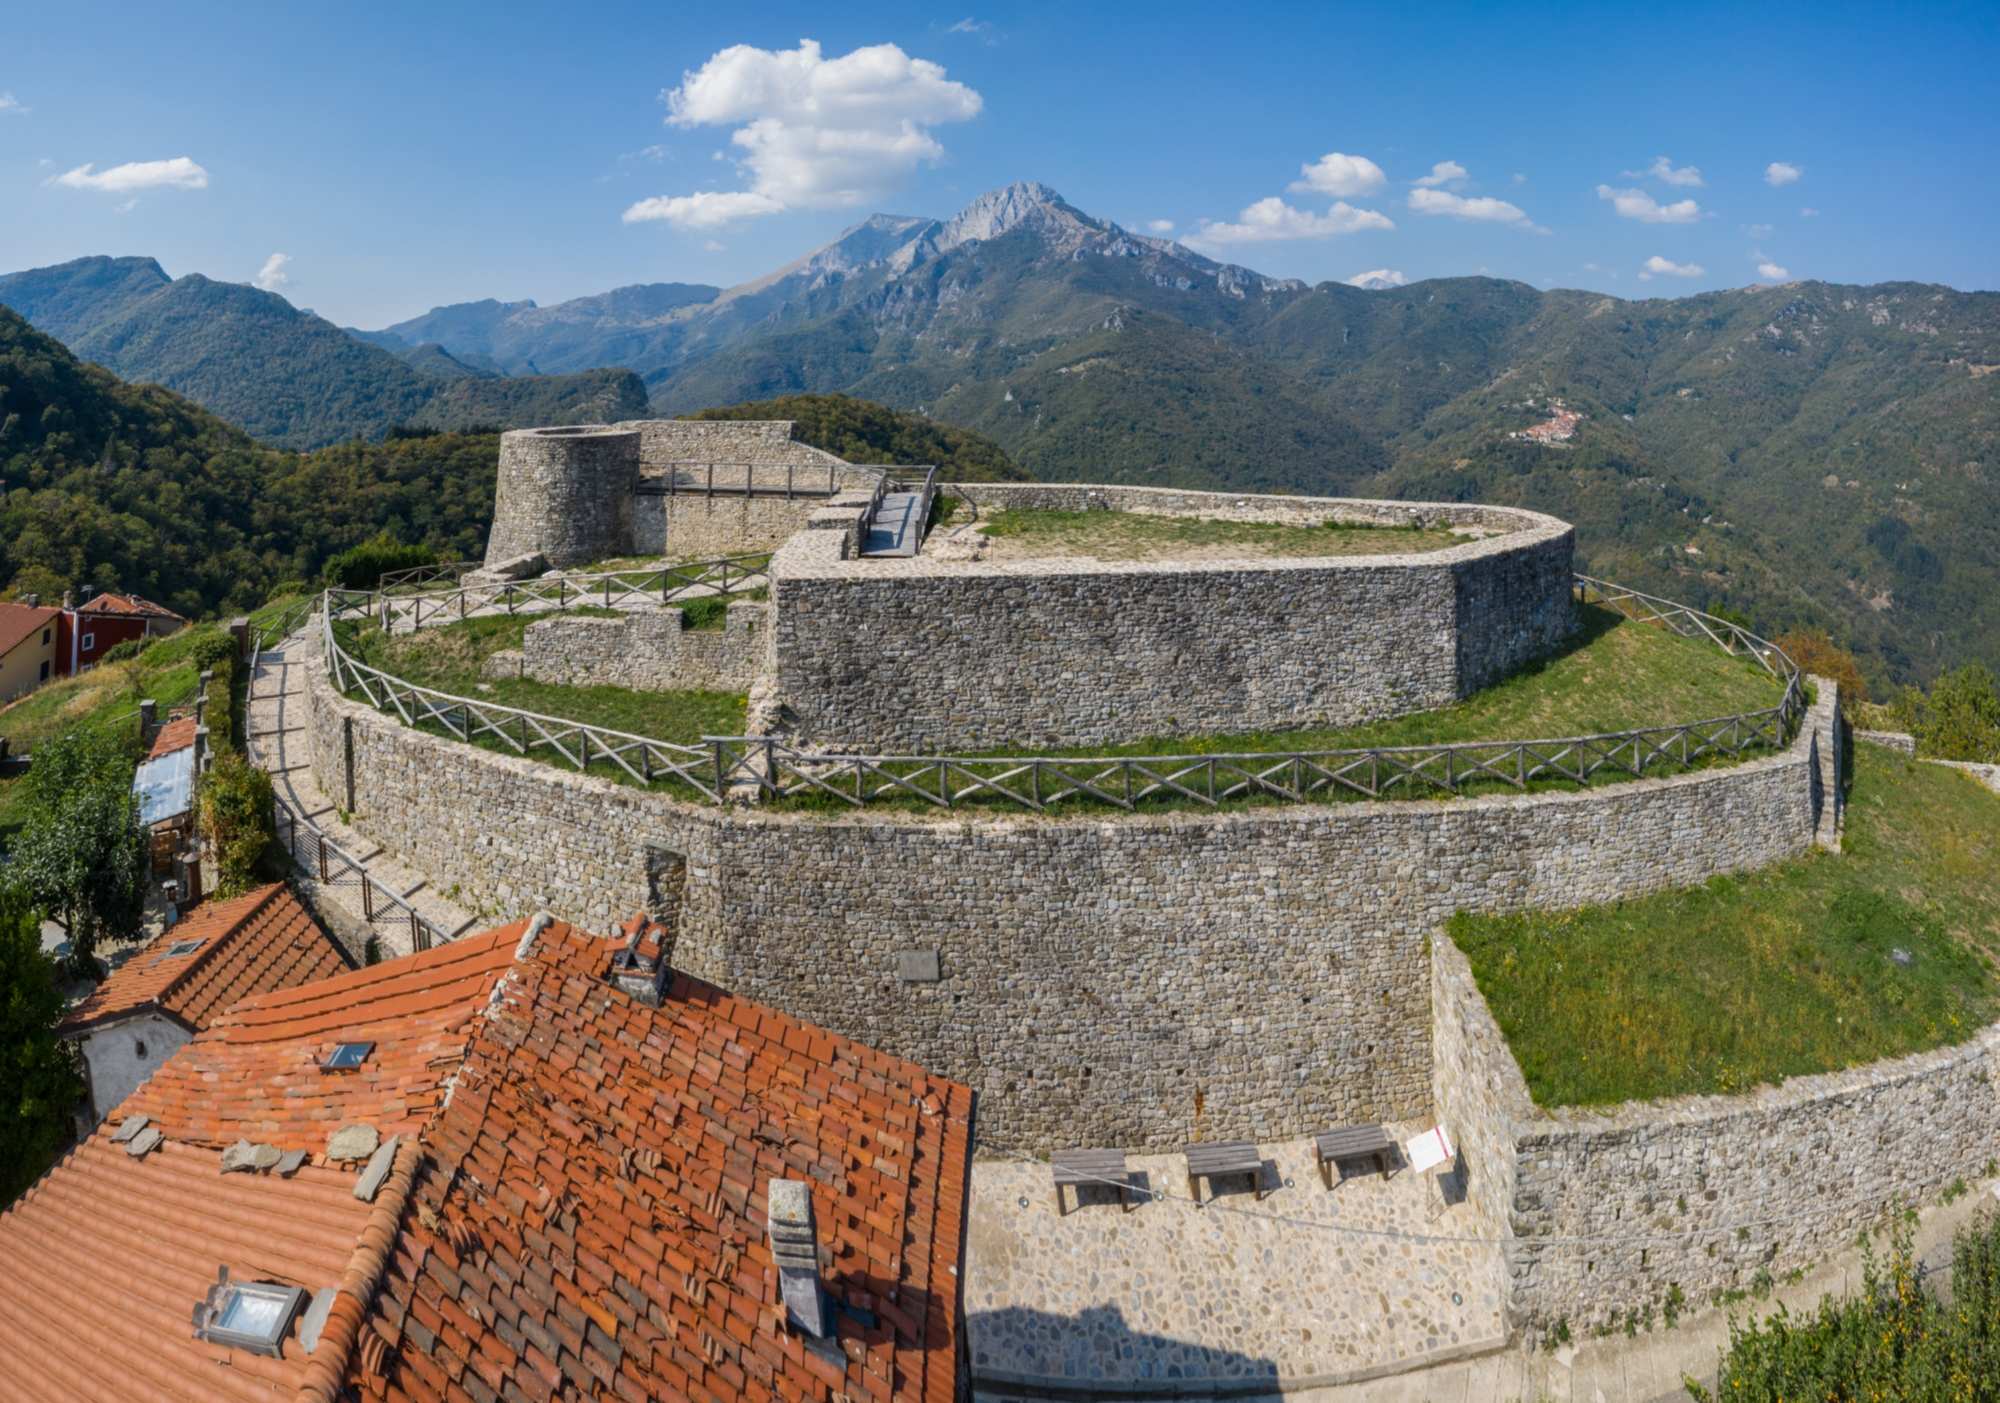 The Trassilico Fortress